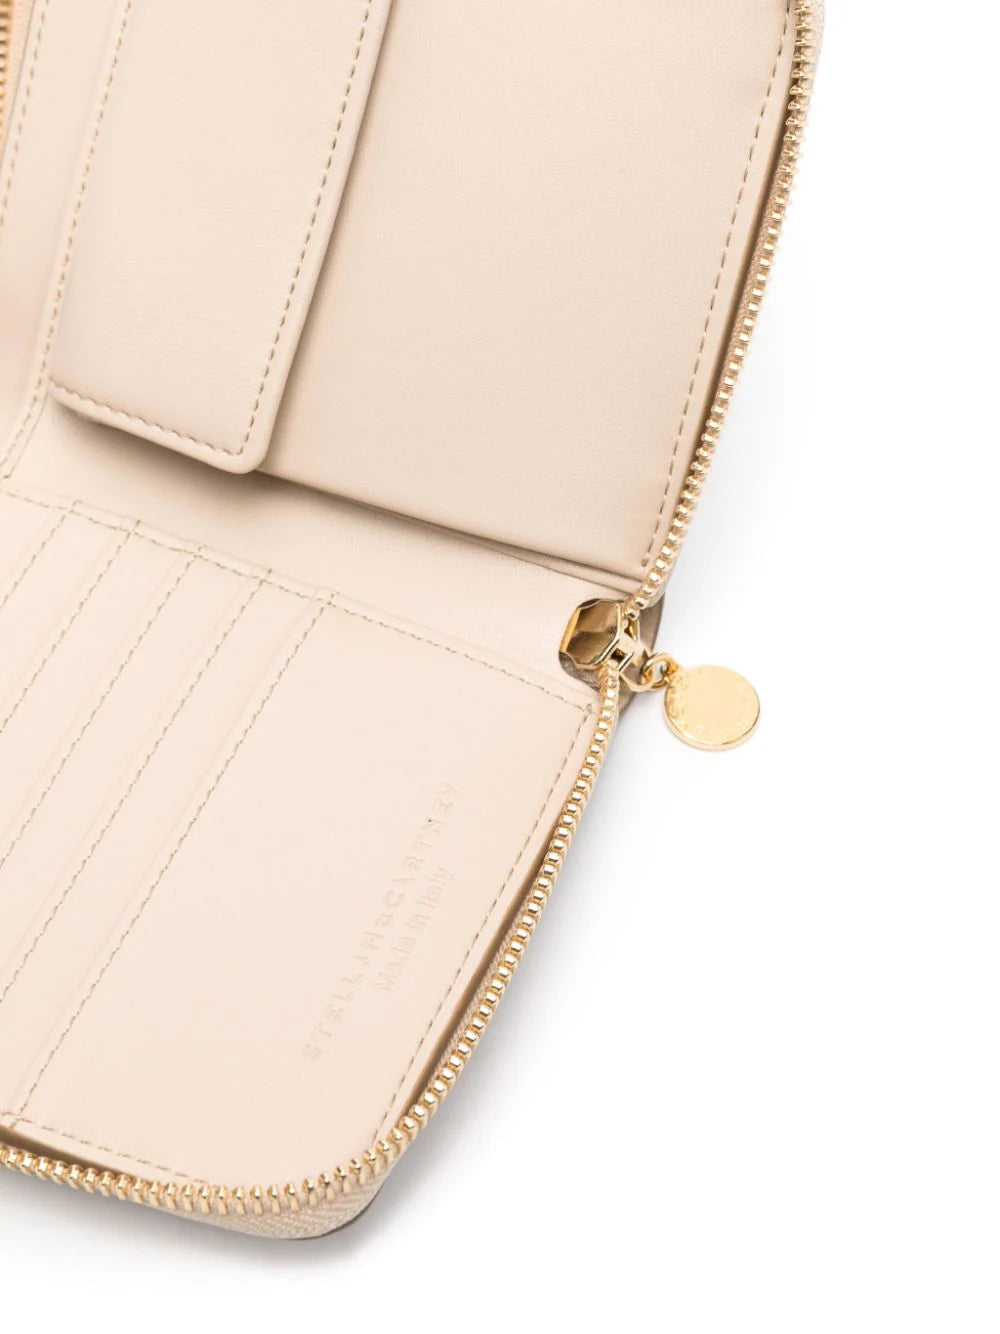 Zip Around Mini Wallet Embossed Grainy Mat W/Studded Logo, cream